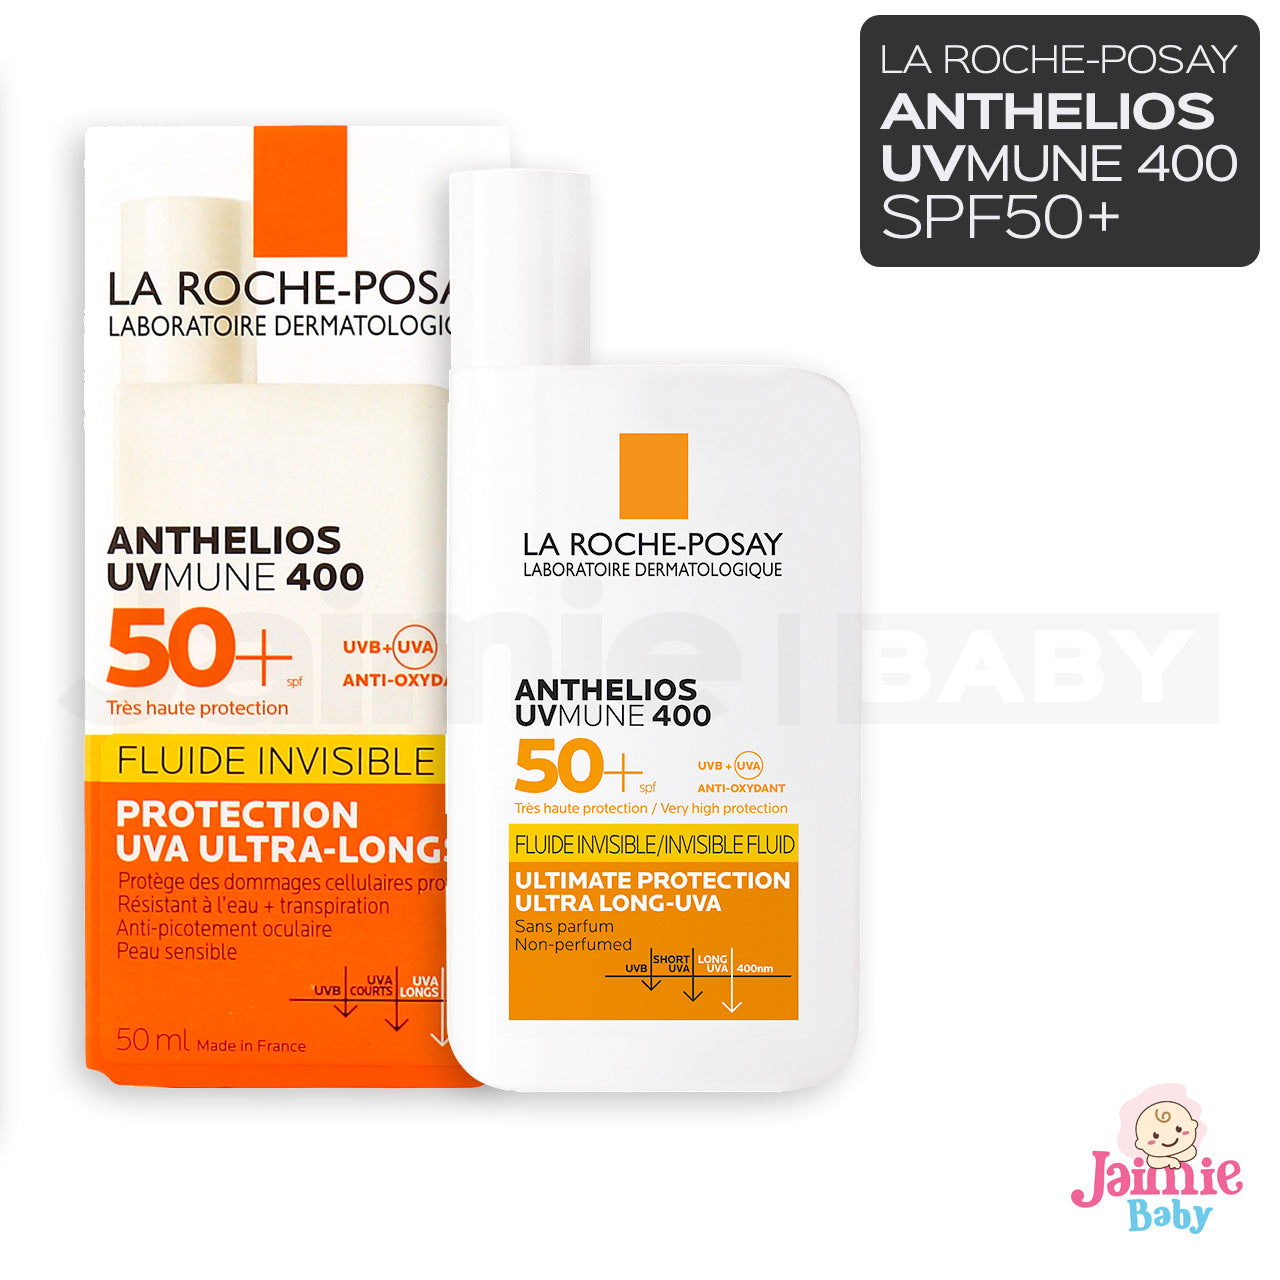 La Roche Posay Anthelios UV Mune 400 SPG50+ sunscreen